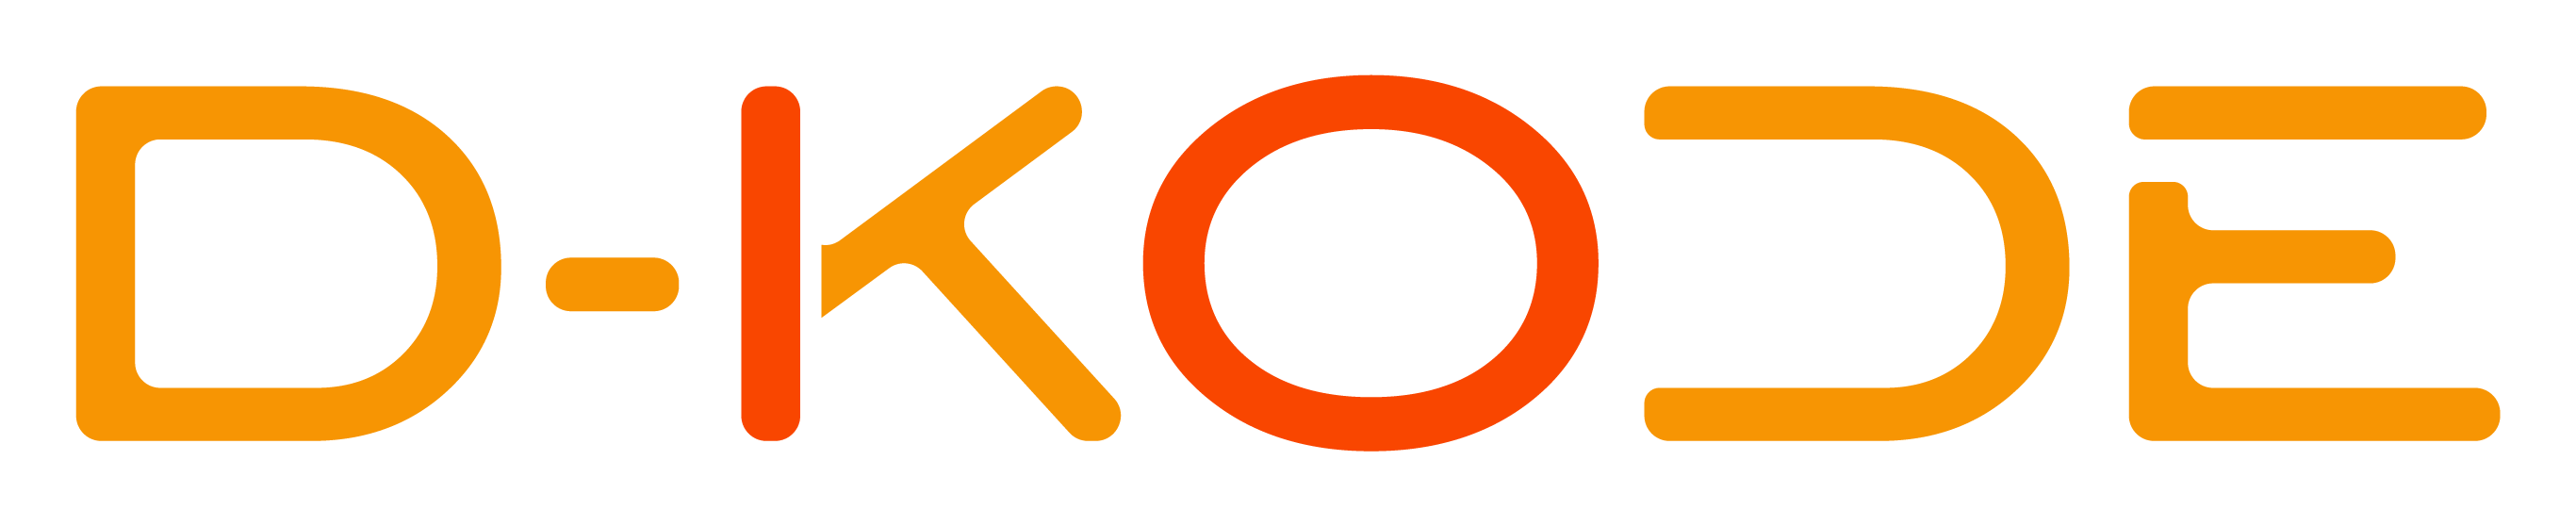 D-Kode, D-Kode logo, logo design